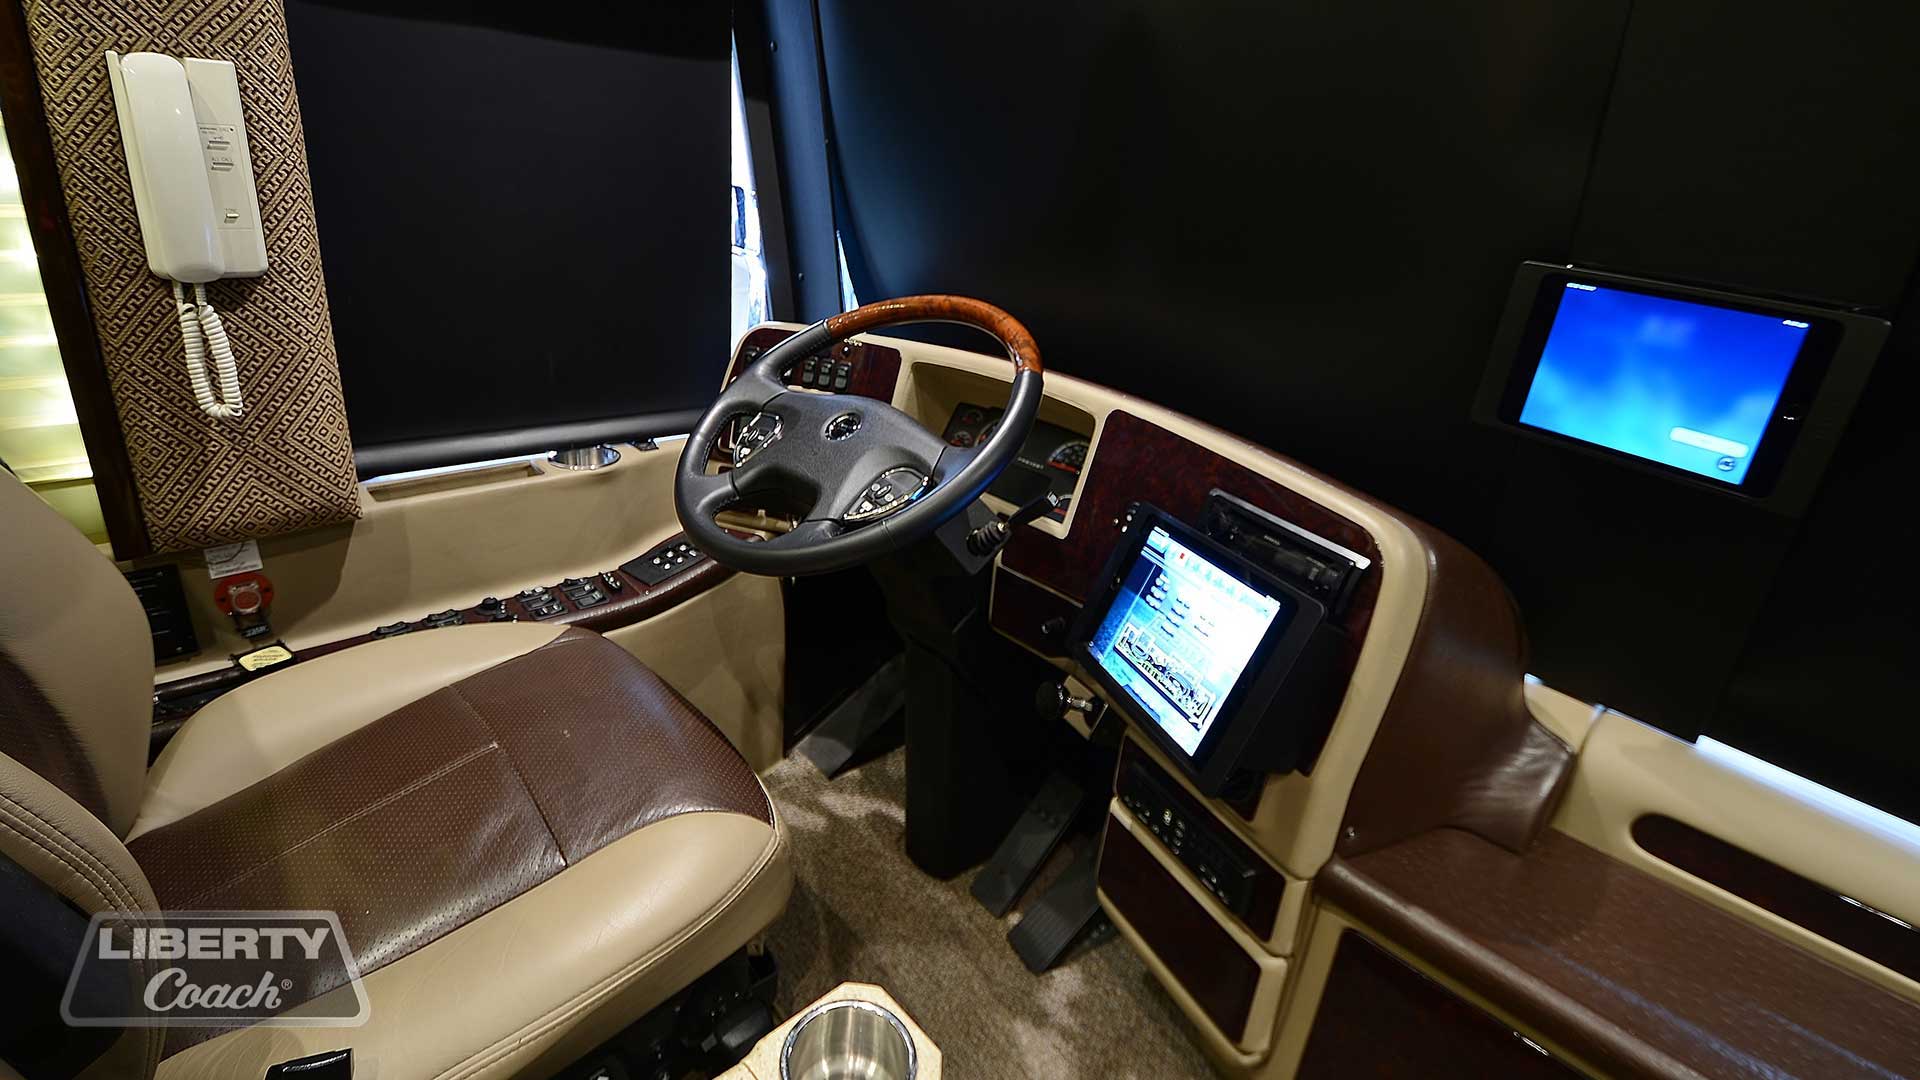 Liberty-Coach-5390-Cockpit-Gallery-NEW.jpg